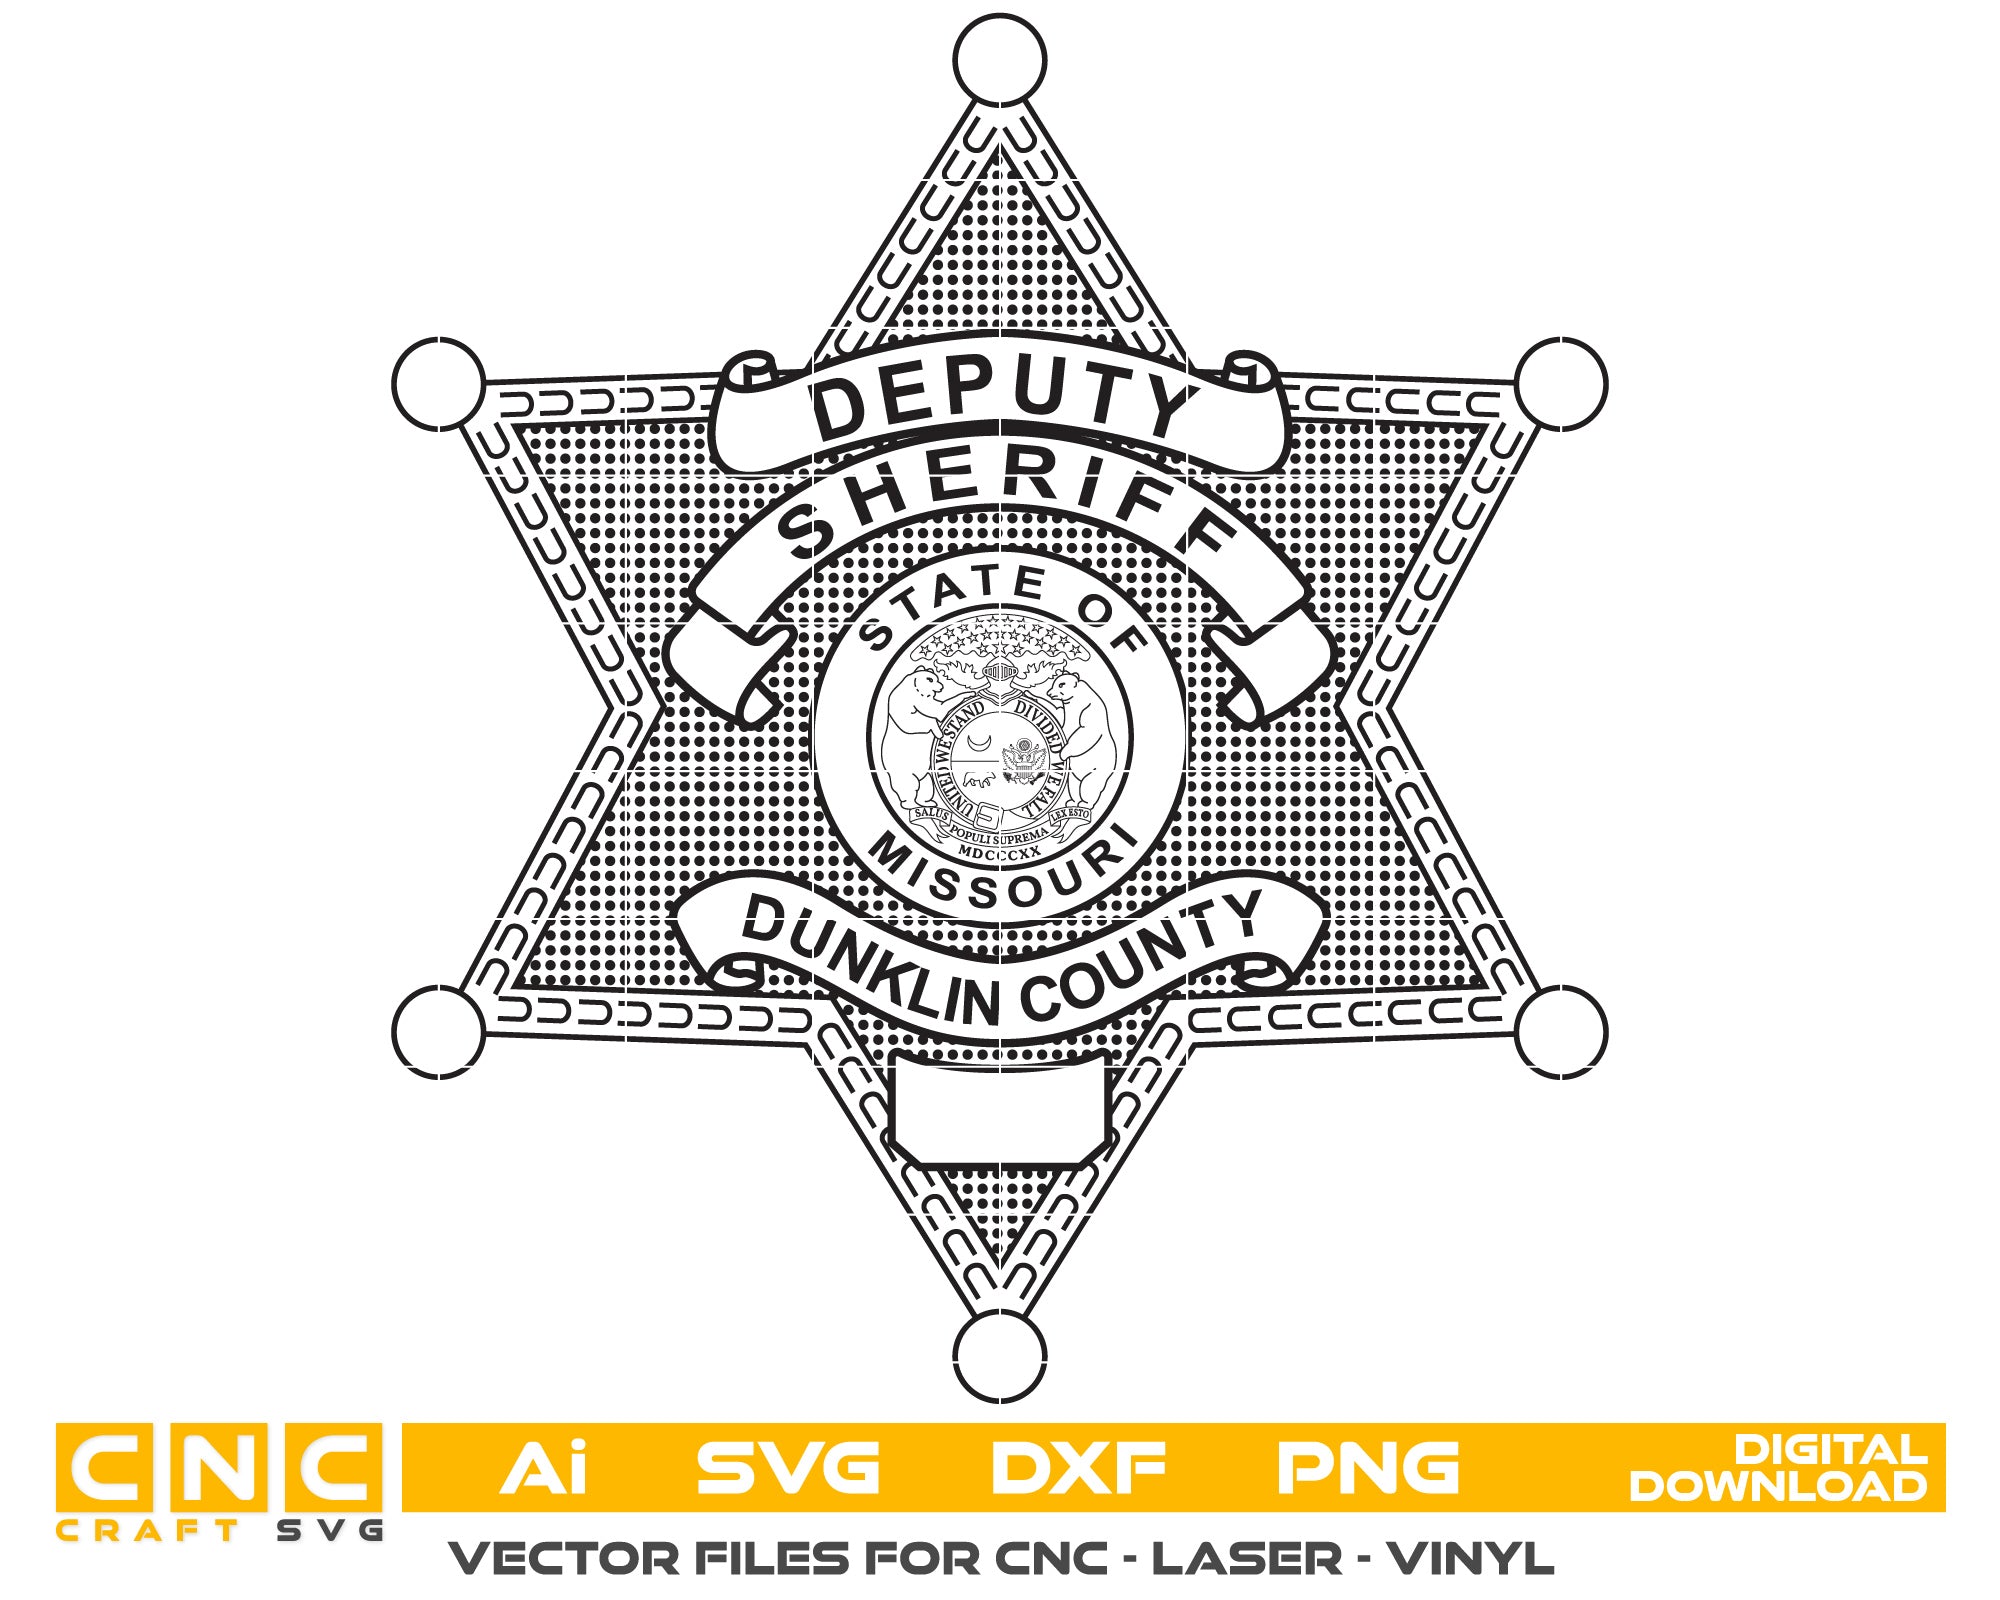 Dunkilin County Deputy sheriff Badge vector art